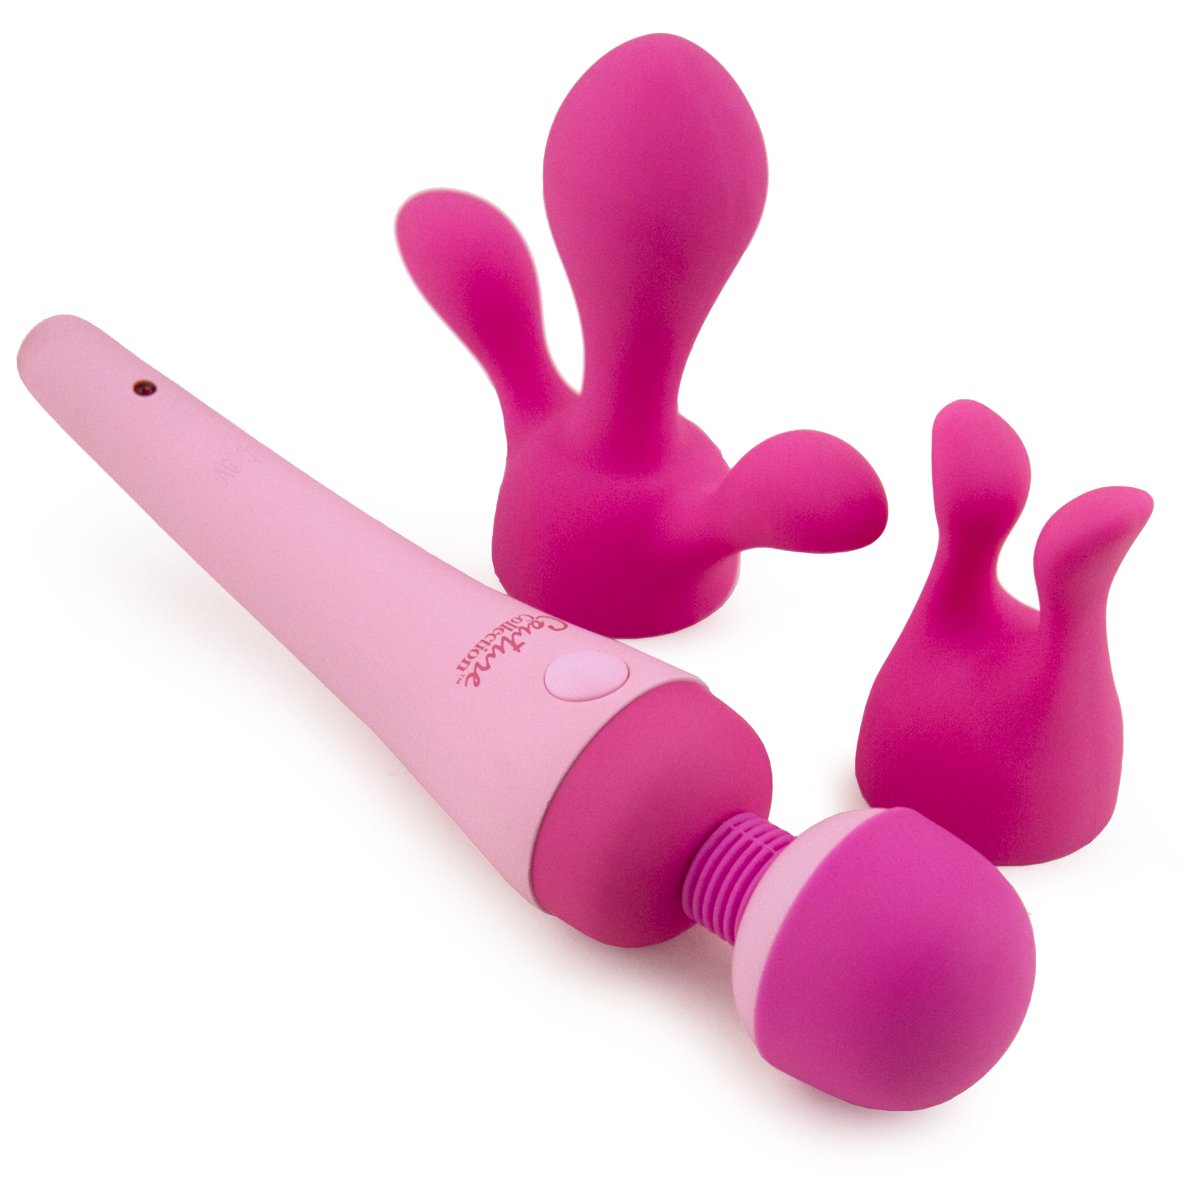 The Pink Inspire Vibrator - Unrelenting Vibrations